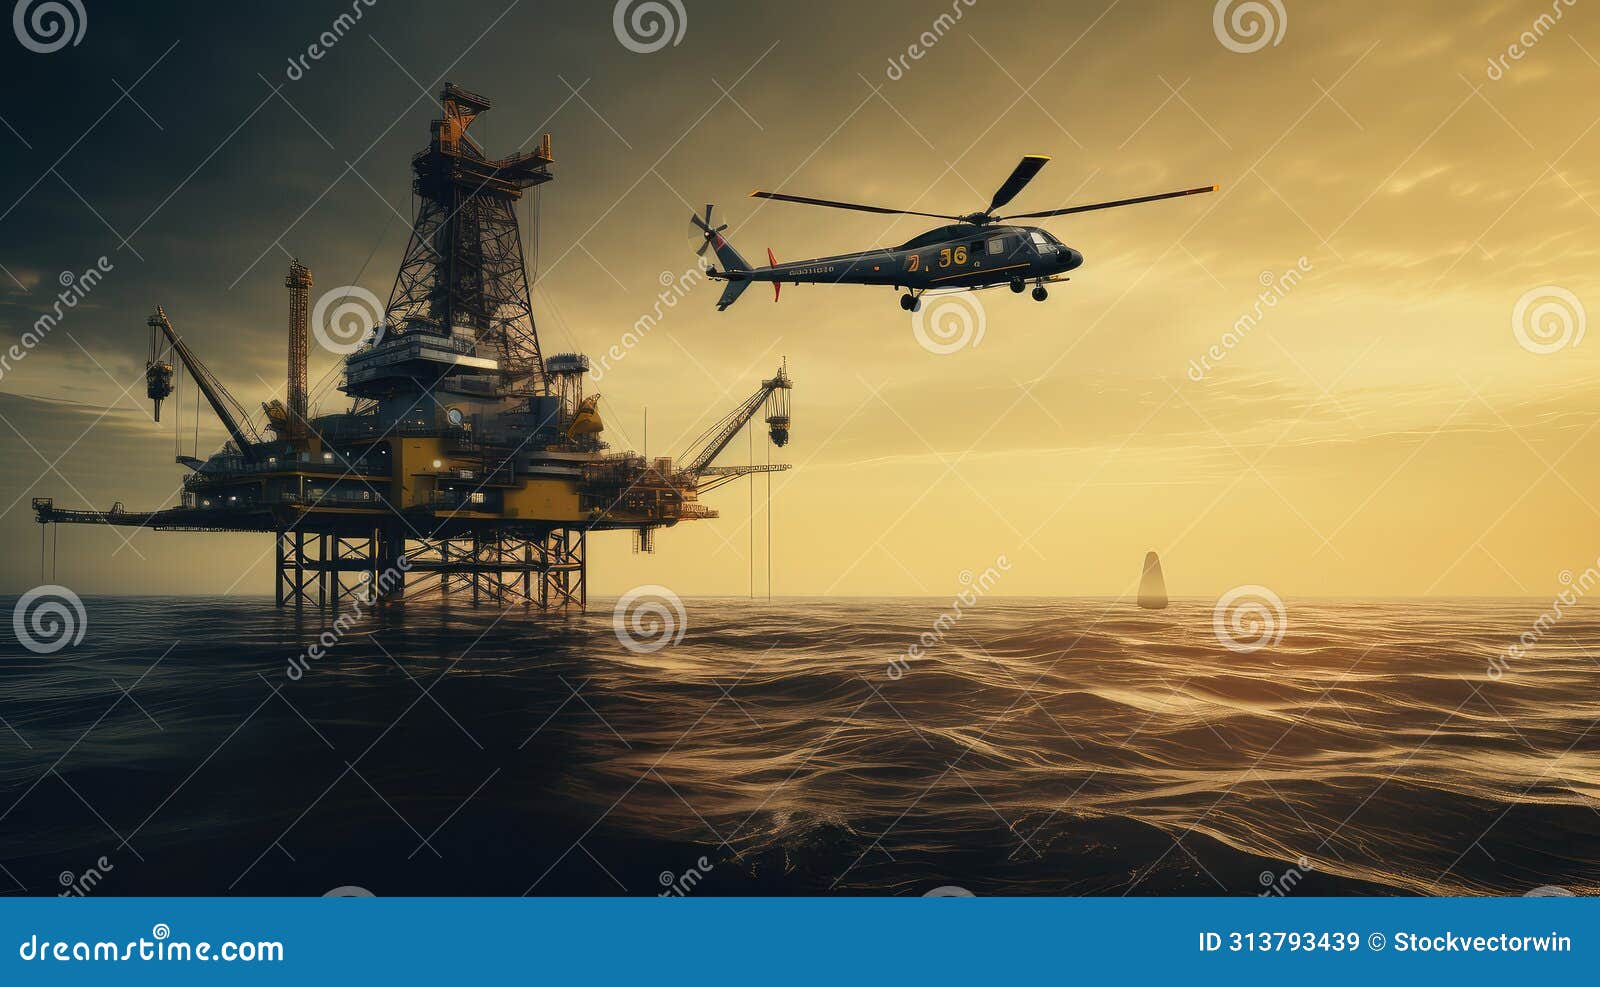 massive offshore oil rig